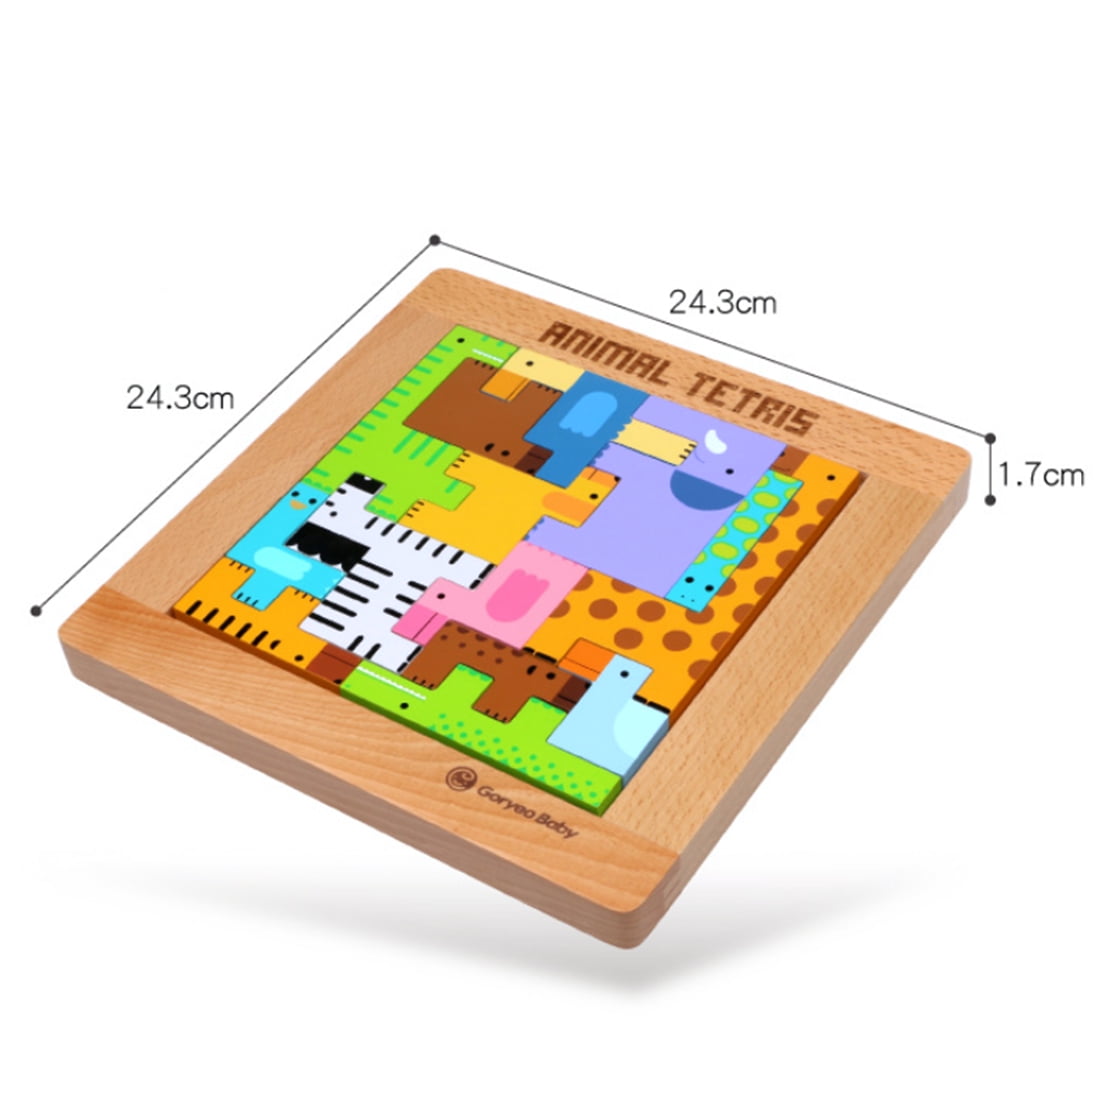 Tetris block game shape set isolated vector illustration. 20691364